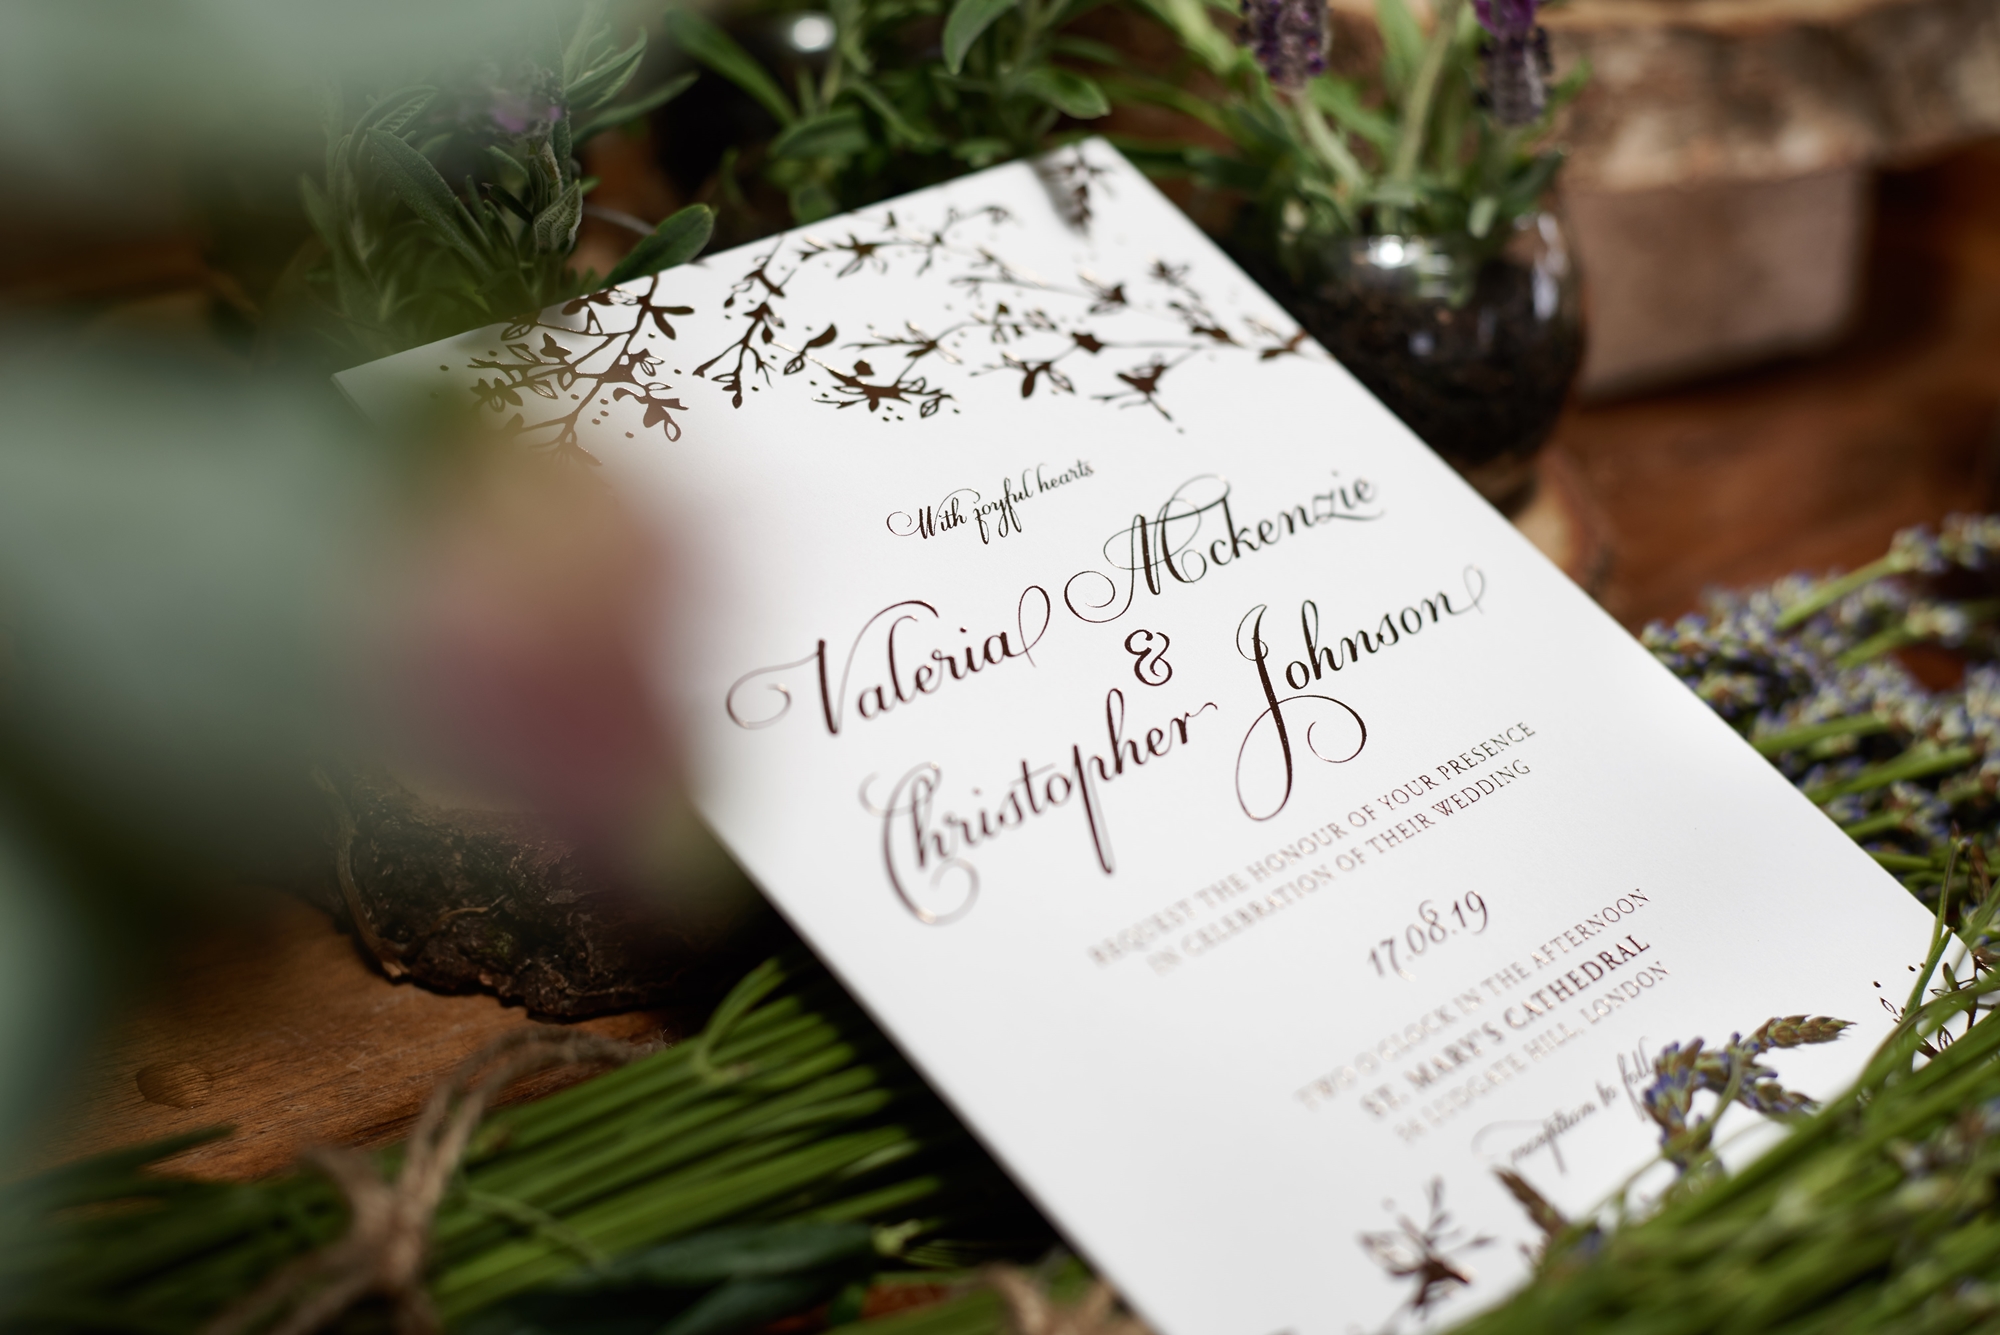 Victoria-Australia-luxury-wedding-inspiration-Sault - Inside table00493.jpg